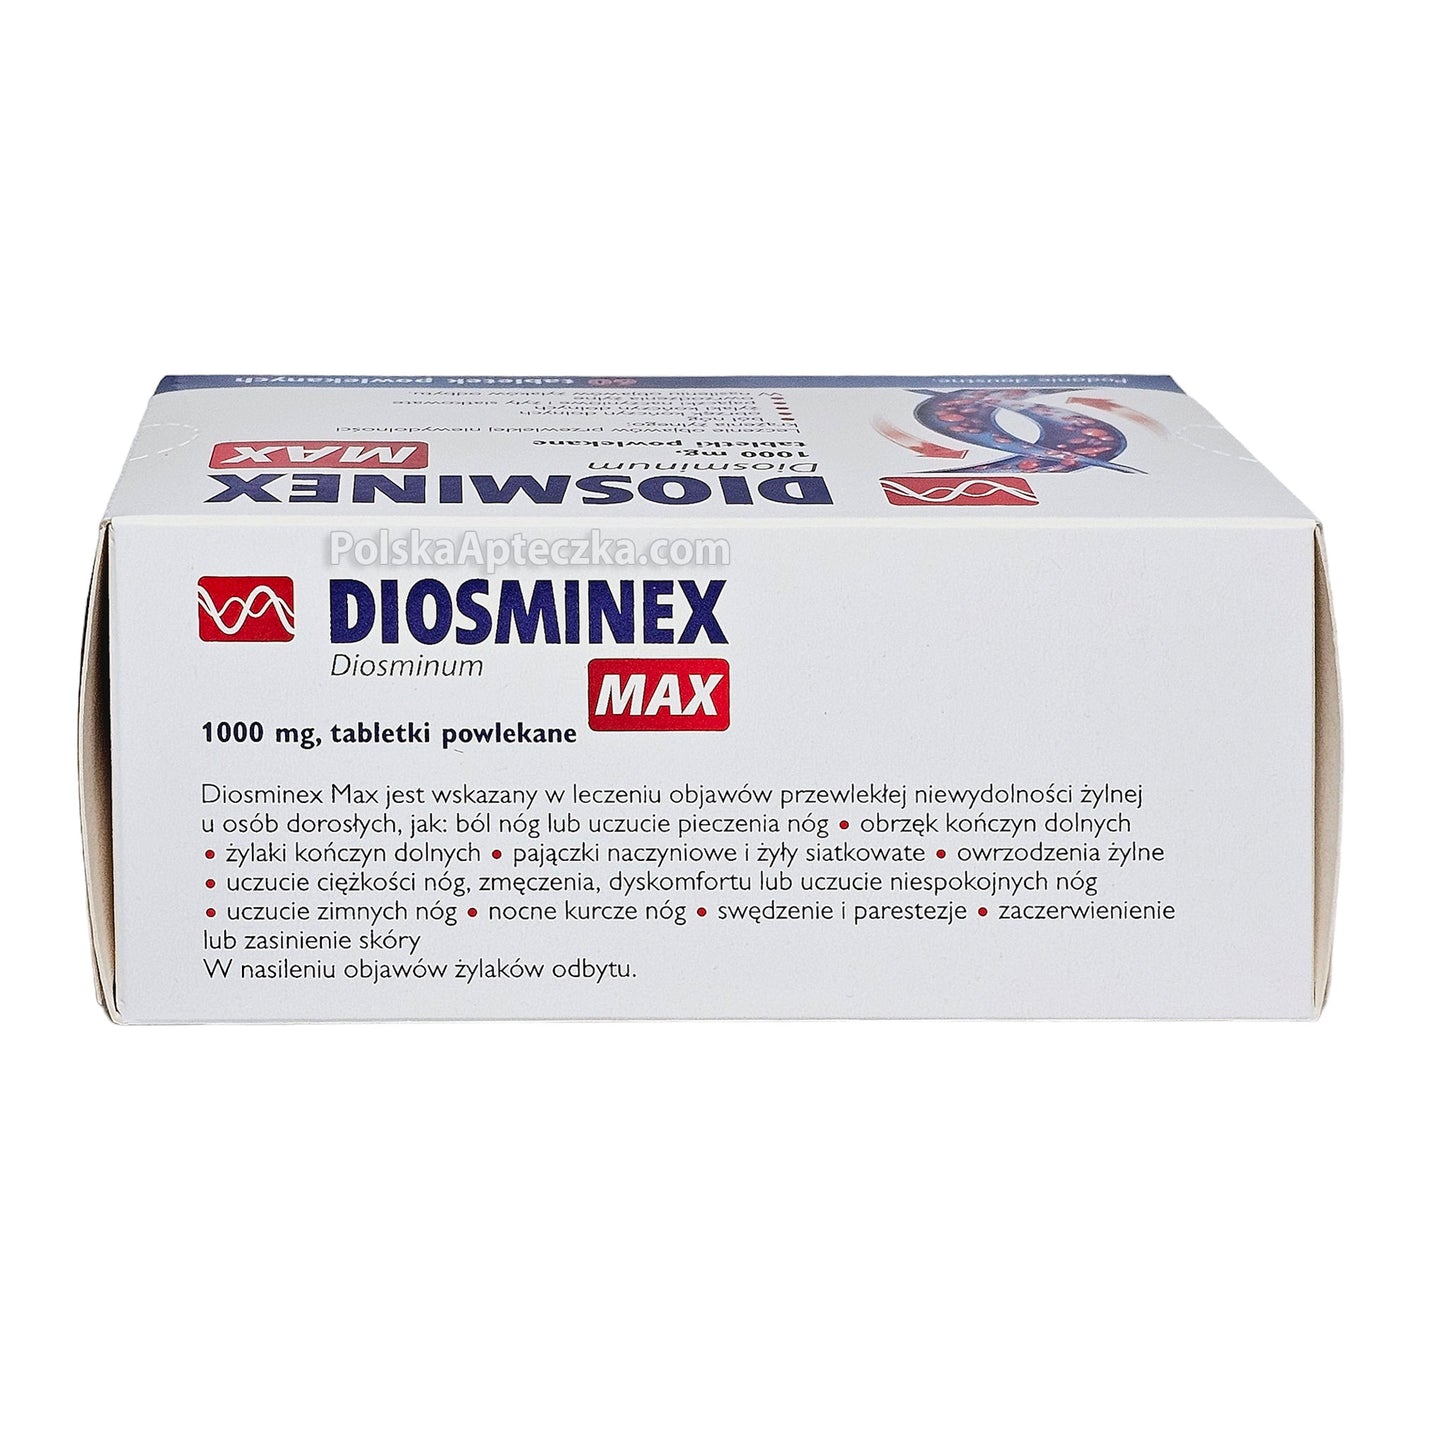 diosminex max tablets